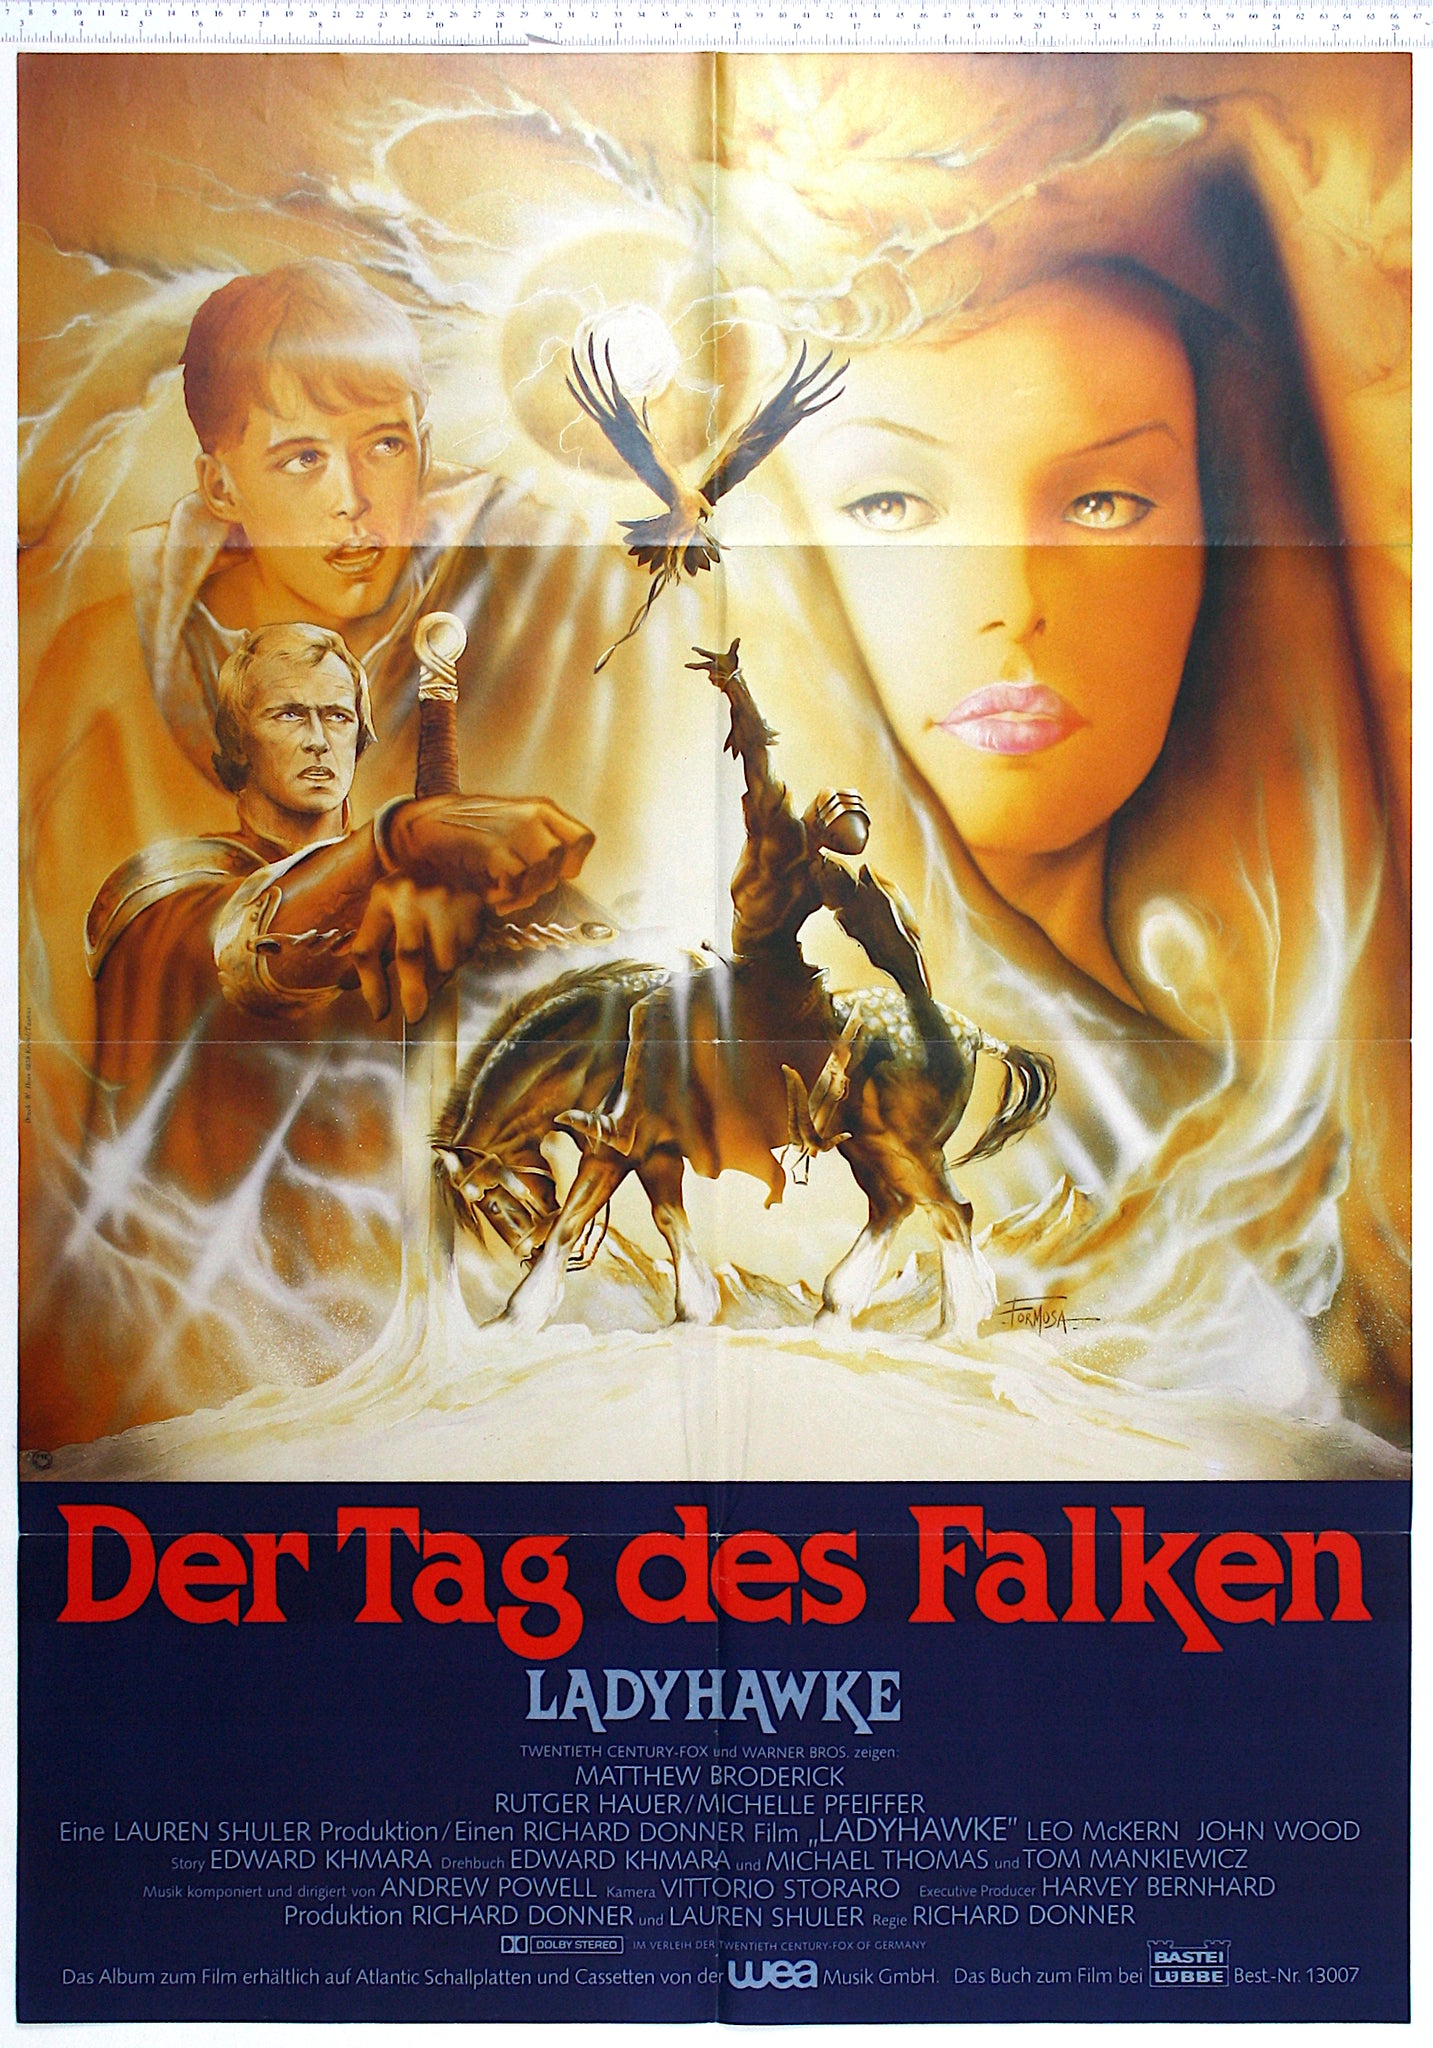 Ladyhawke (1985) German A1 Poster